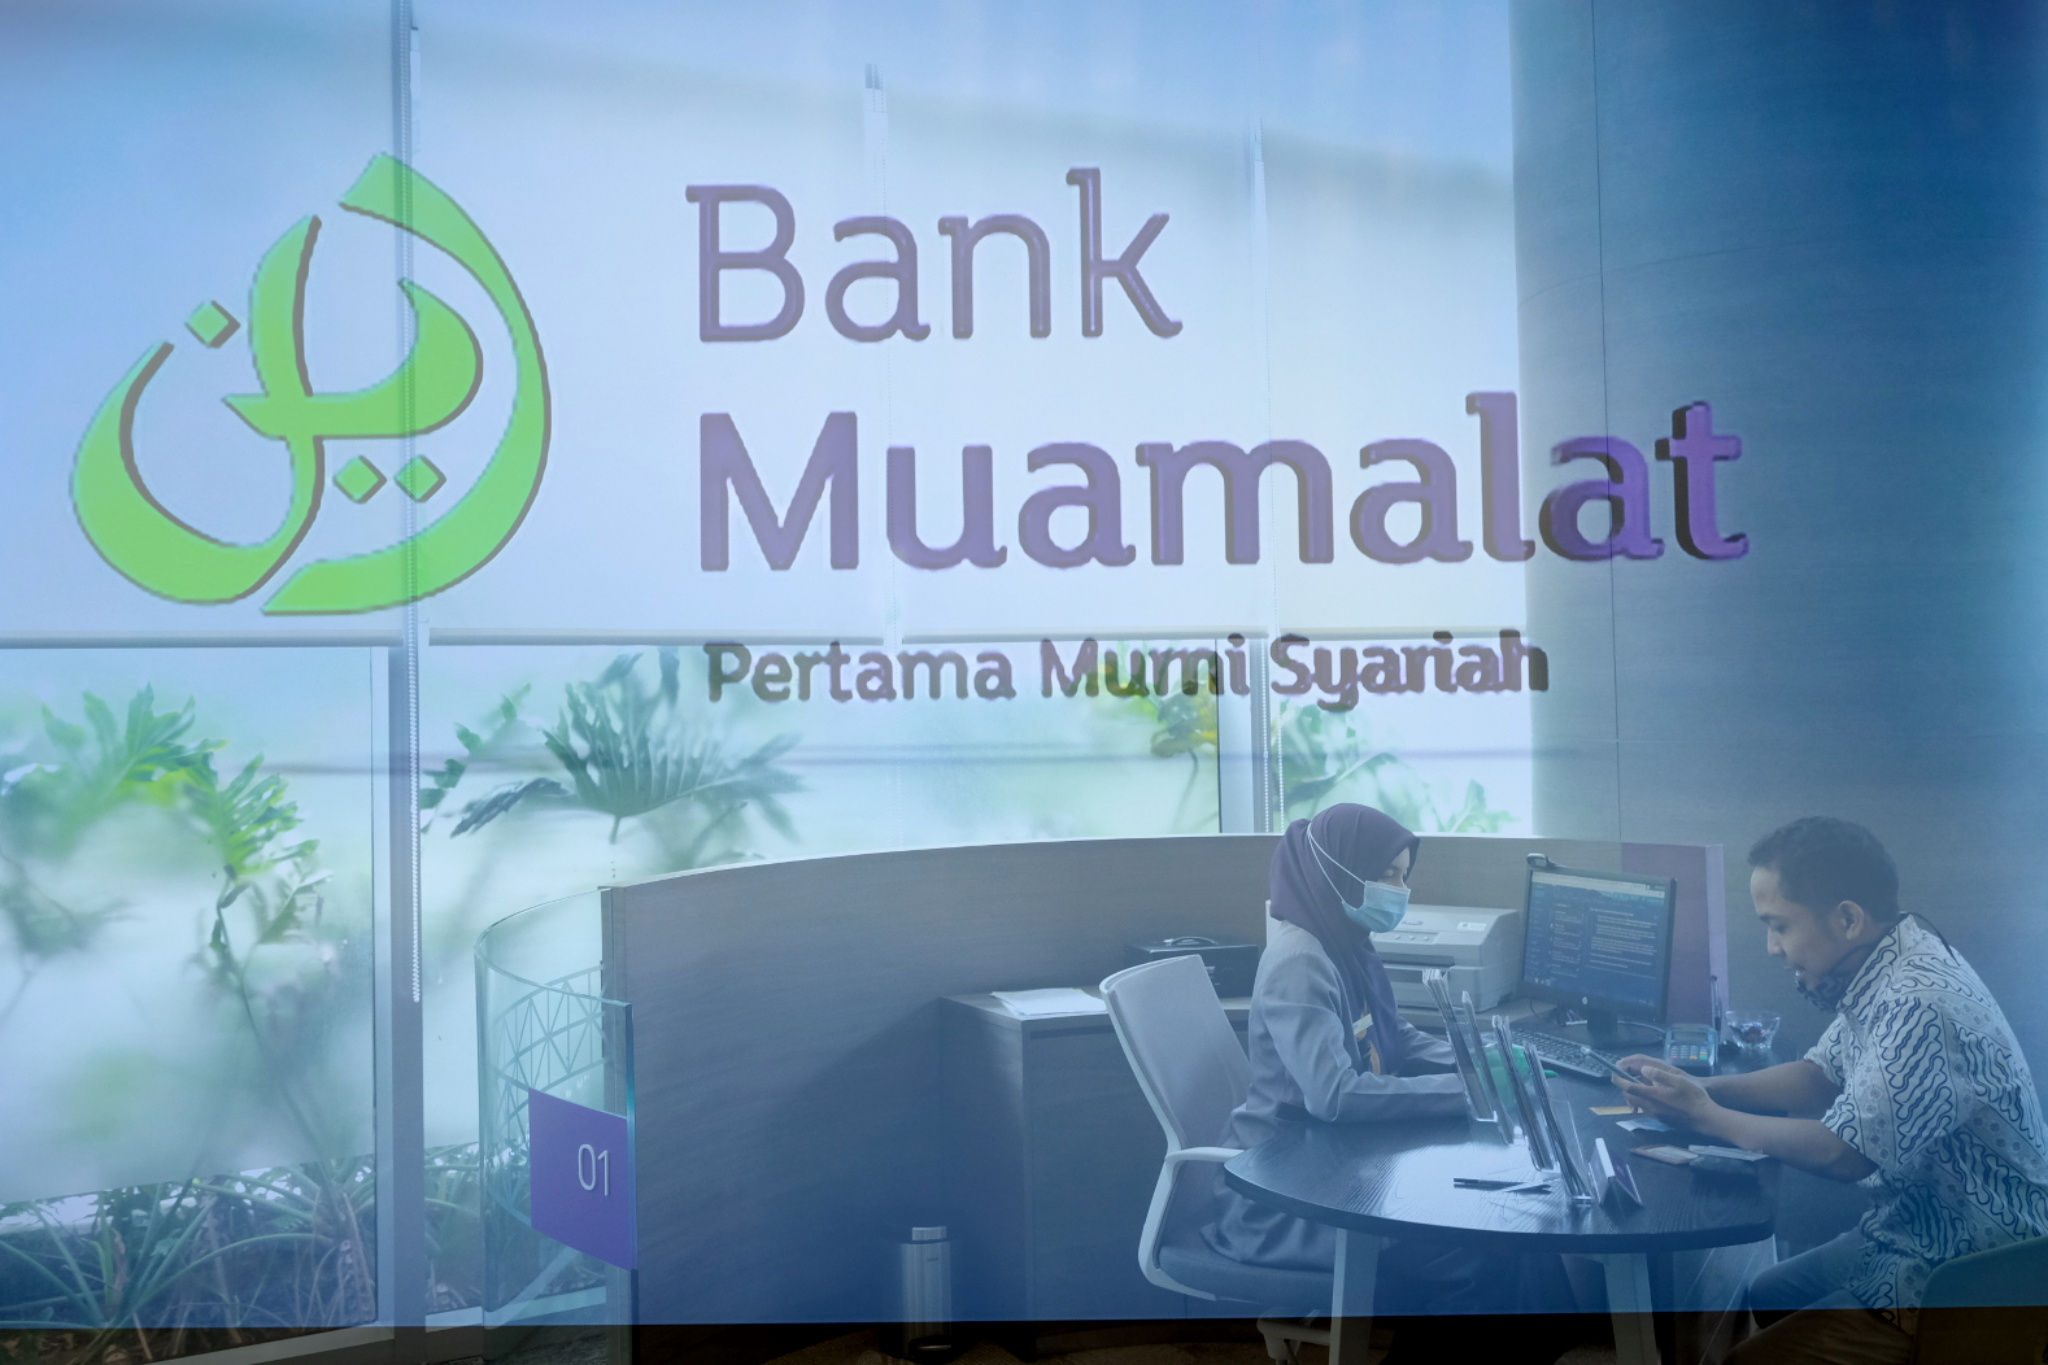 <p>Karyawan melayani nasabah di kantor pusat Bank Muamalat, Jakarta, Rabu, 3 Maret 2021. Foto: Ismail Pohan/TrenAsia</p>
